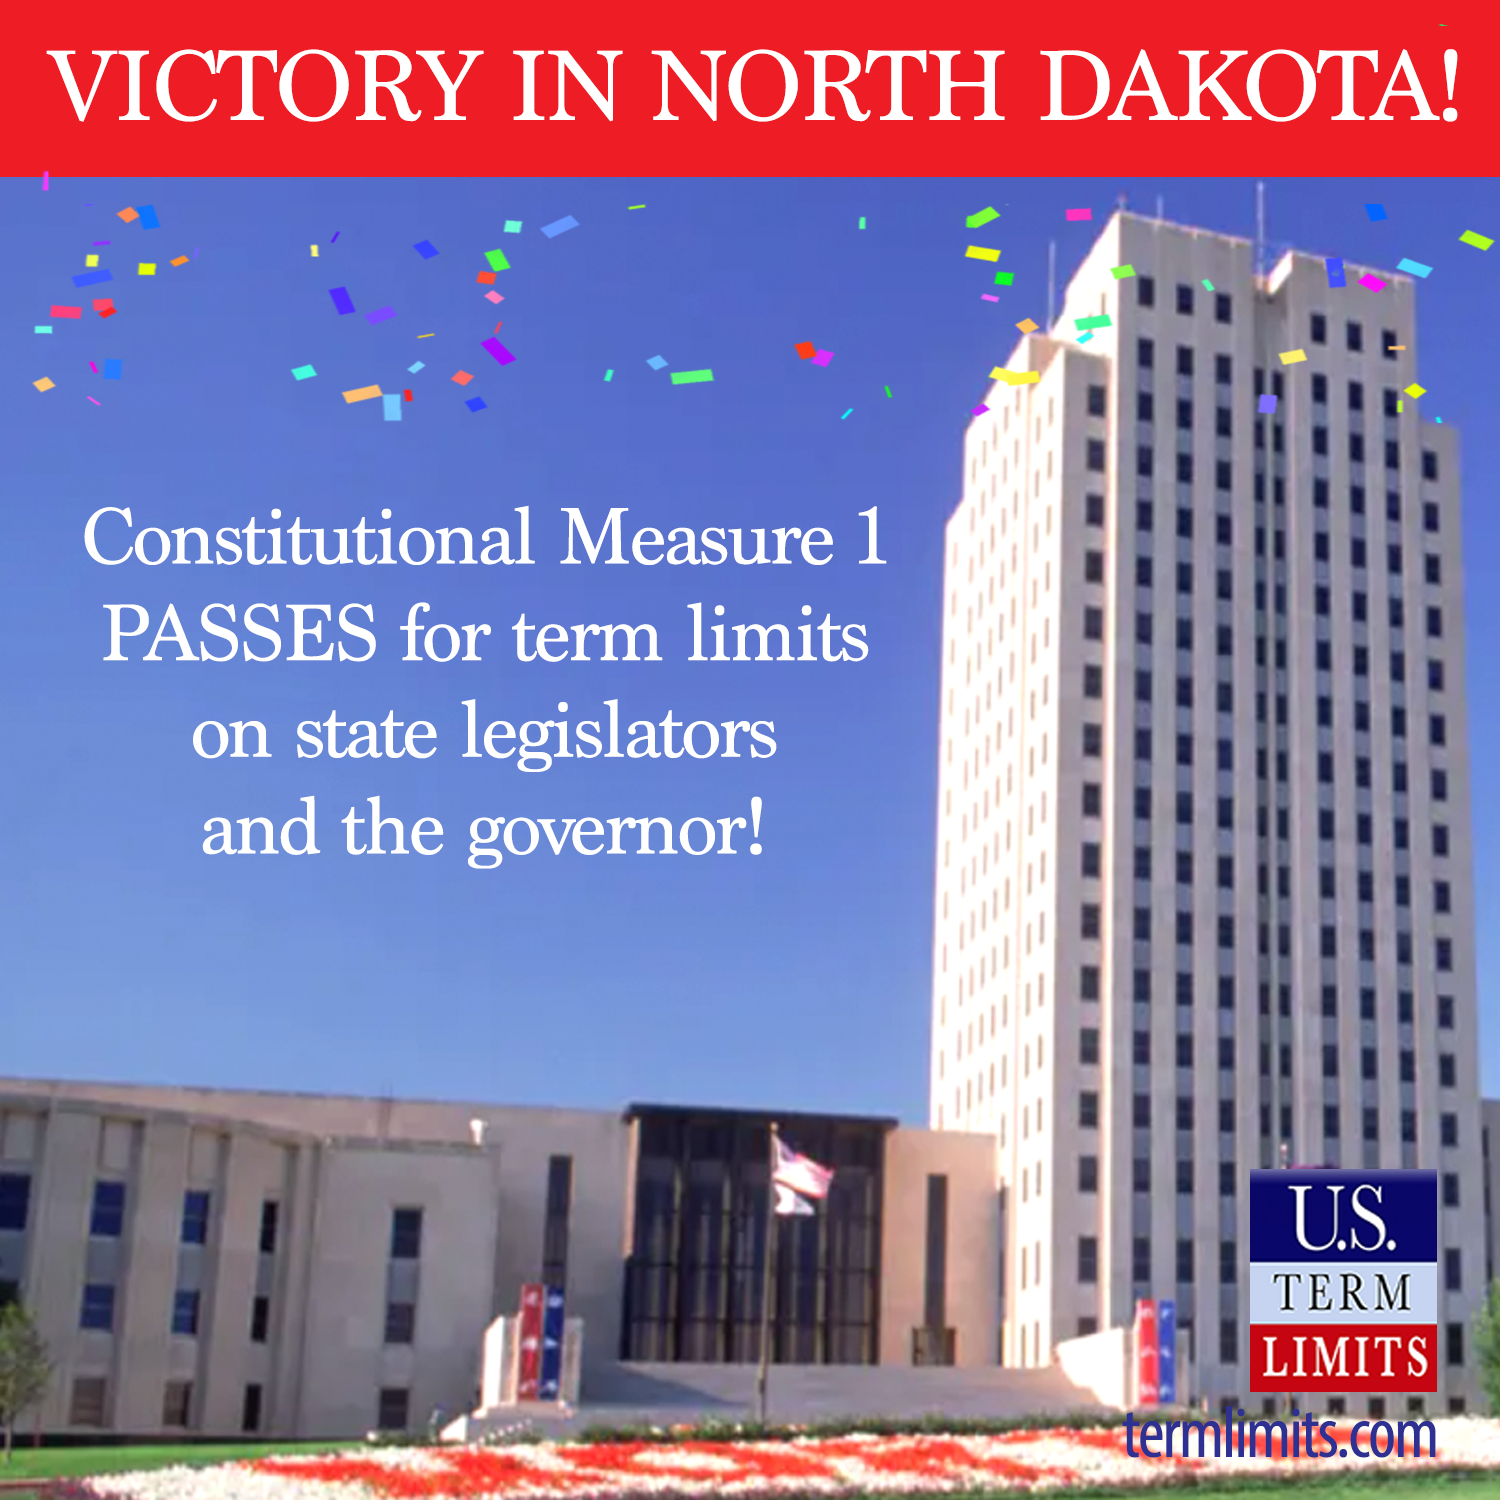 north dakota constitutional measure 1 passes state legislature assembly and governor.